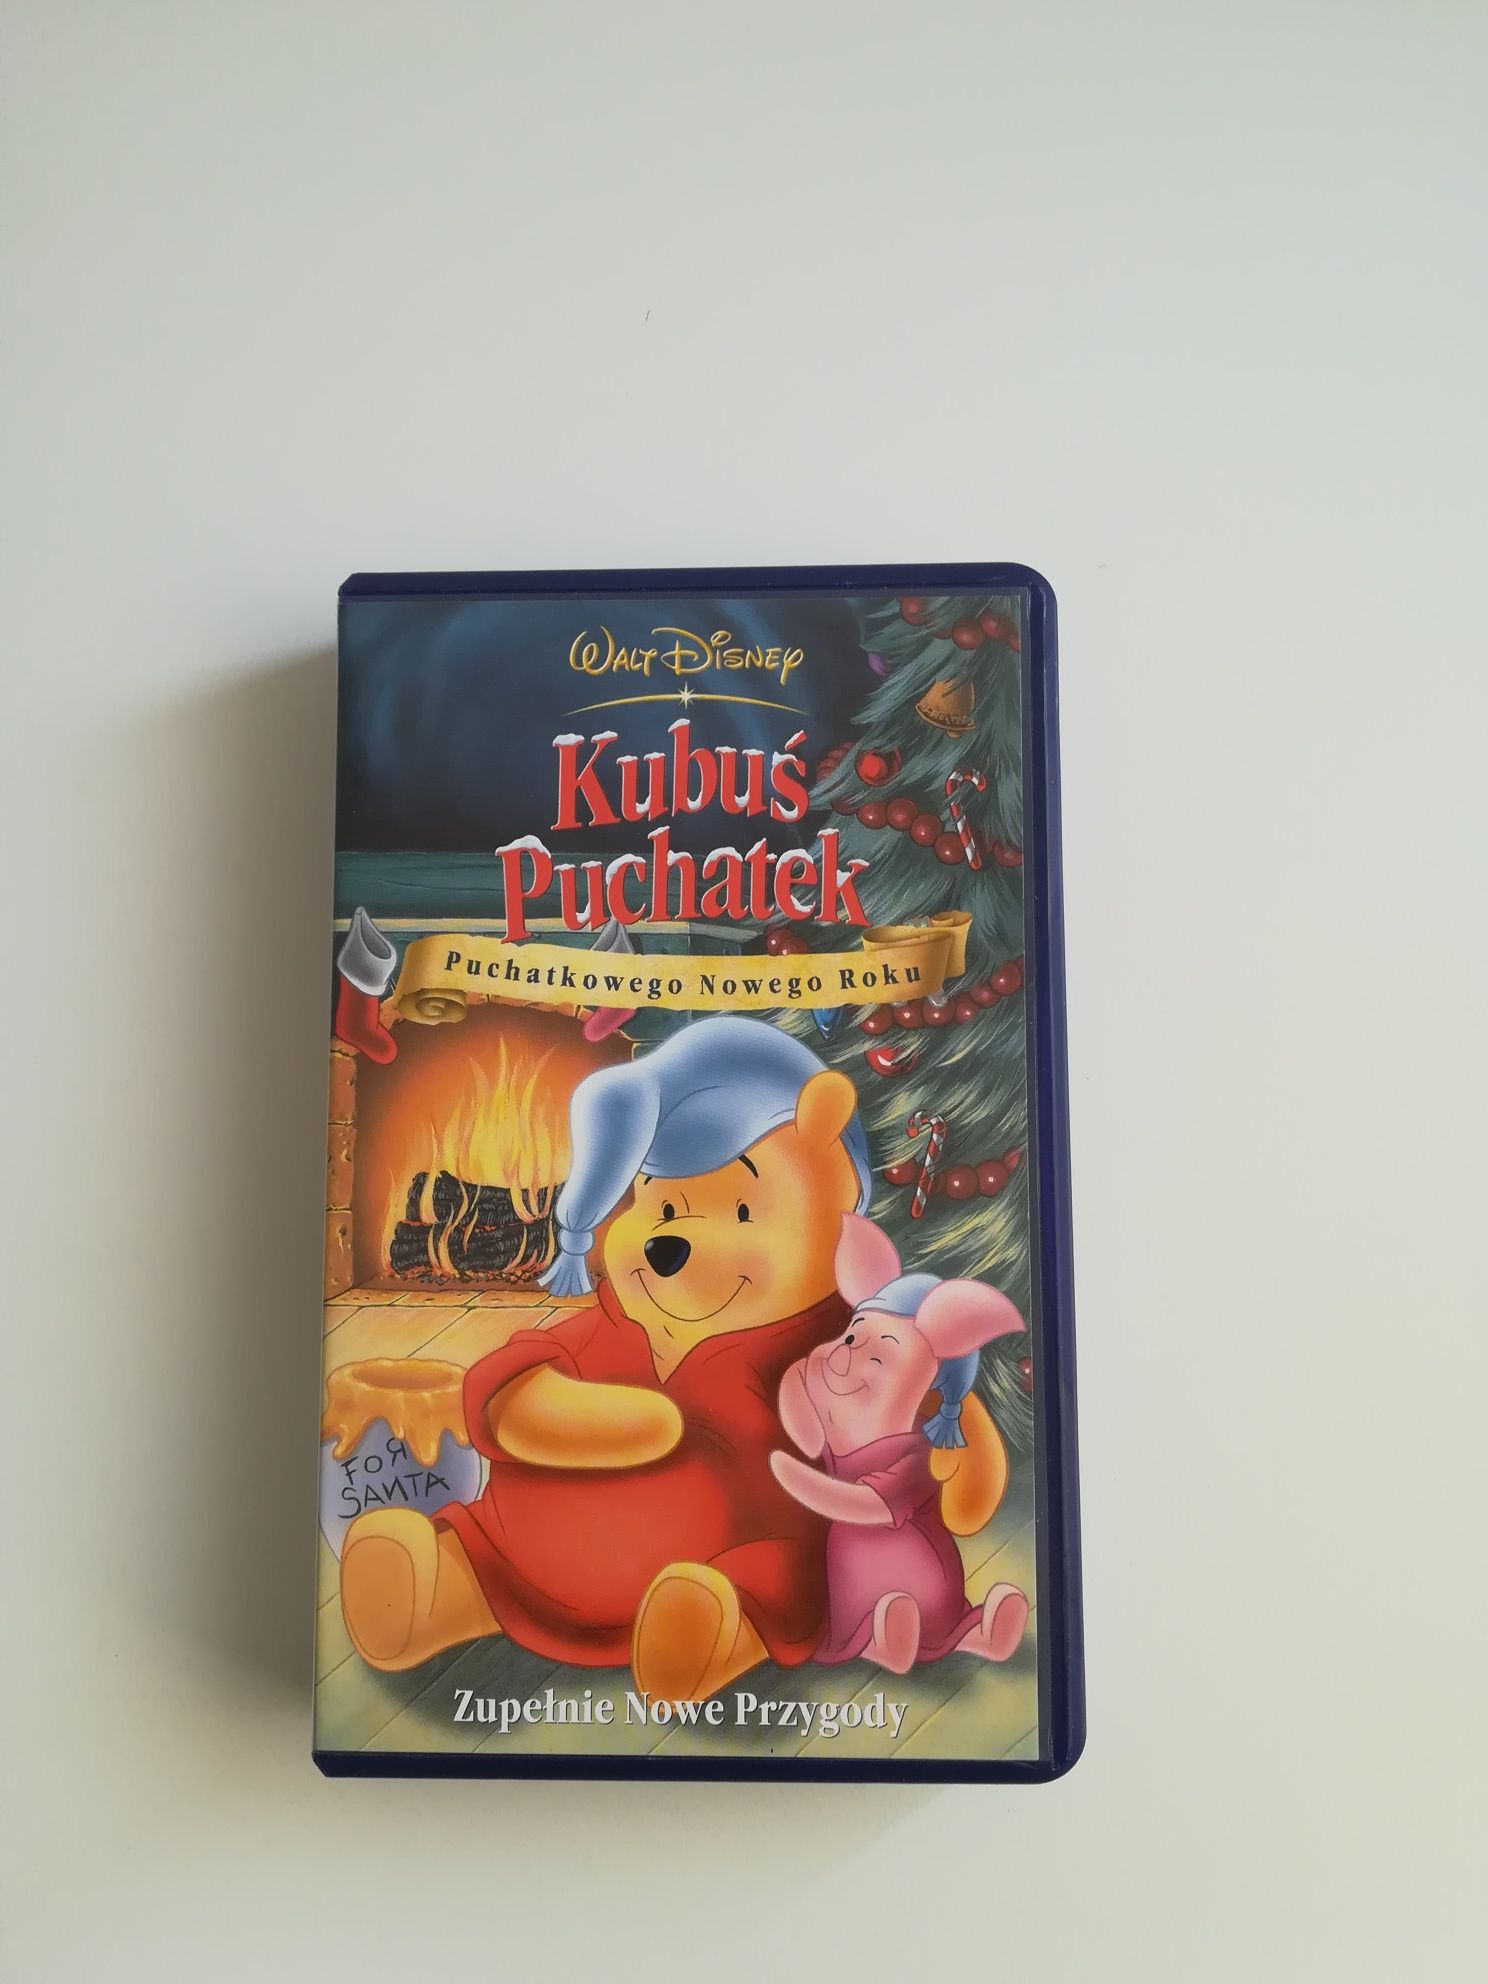 længde Ofre Sult Kubuś Puchatek "Puchatkowego Nowego Roku" Walt Disney film VHS Lublin •  OLX.pl